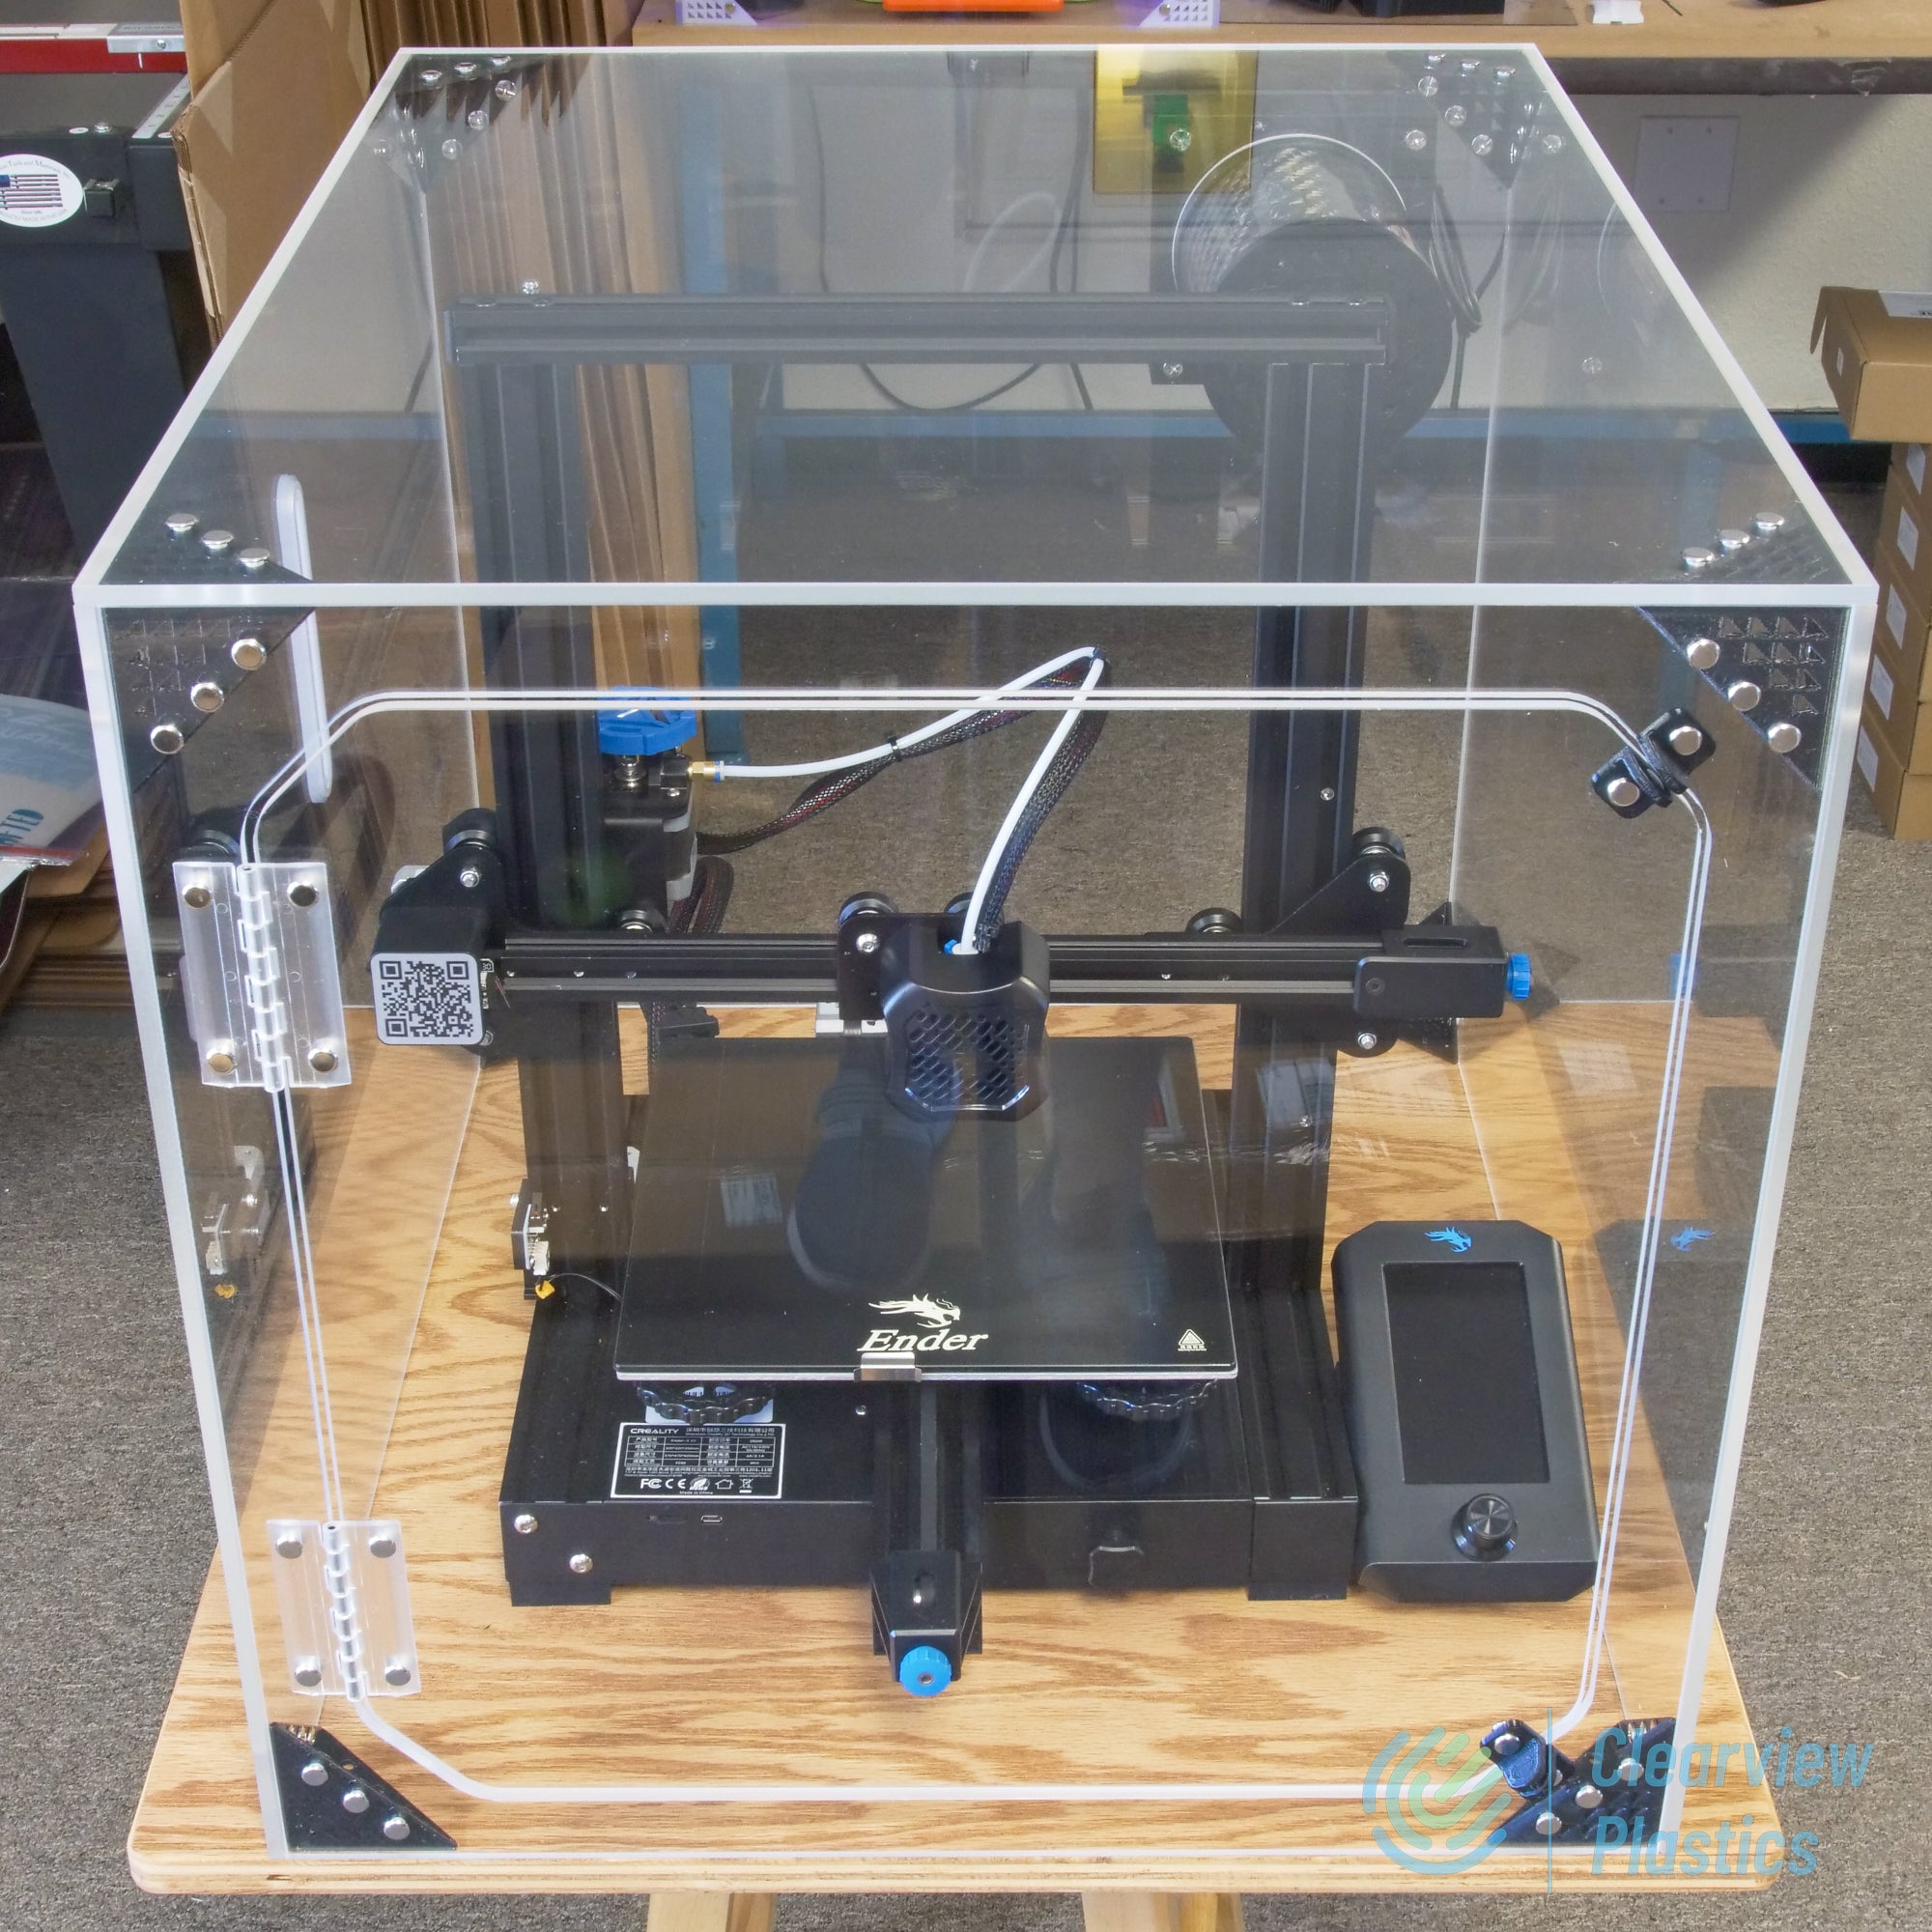 Buy Creality Ender 3 Pro 3D Printer Kit